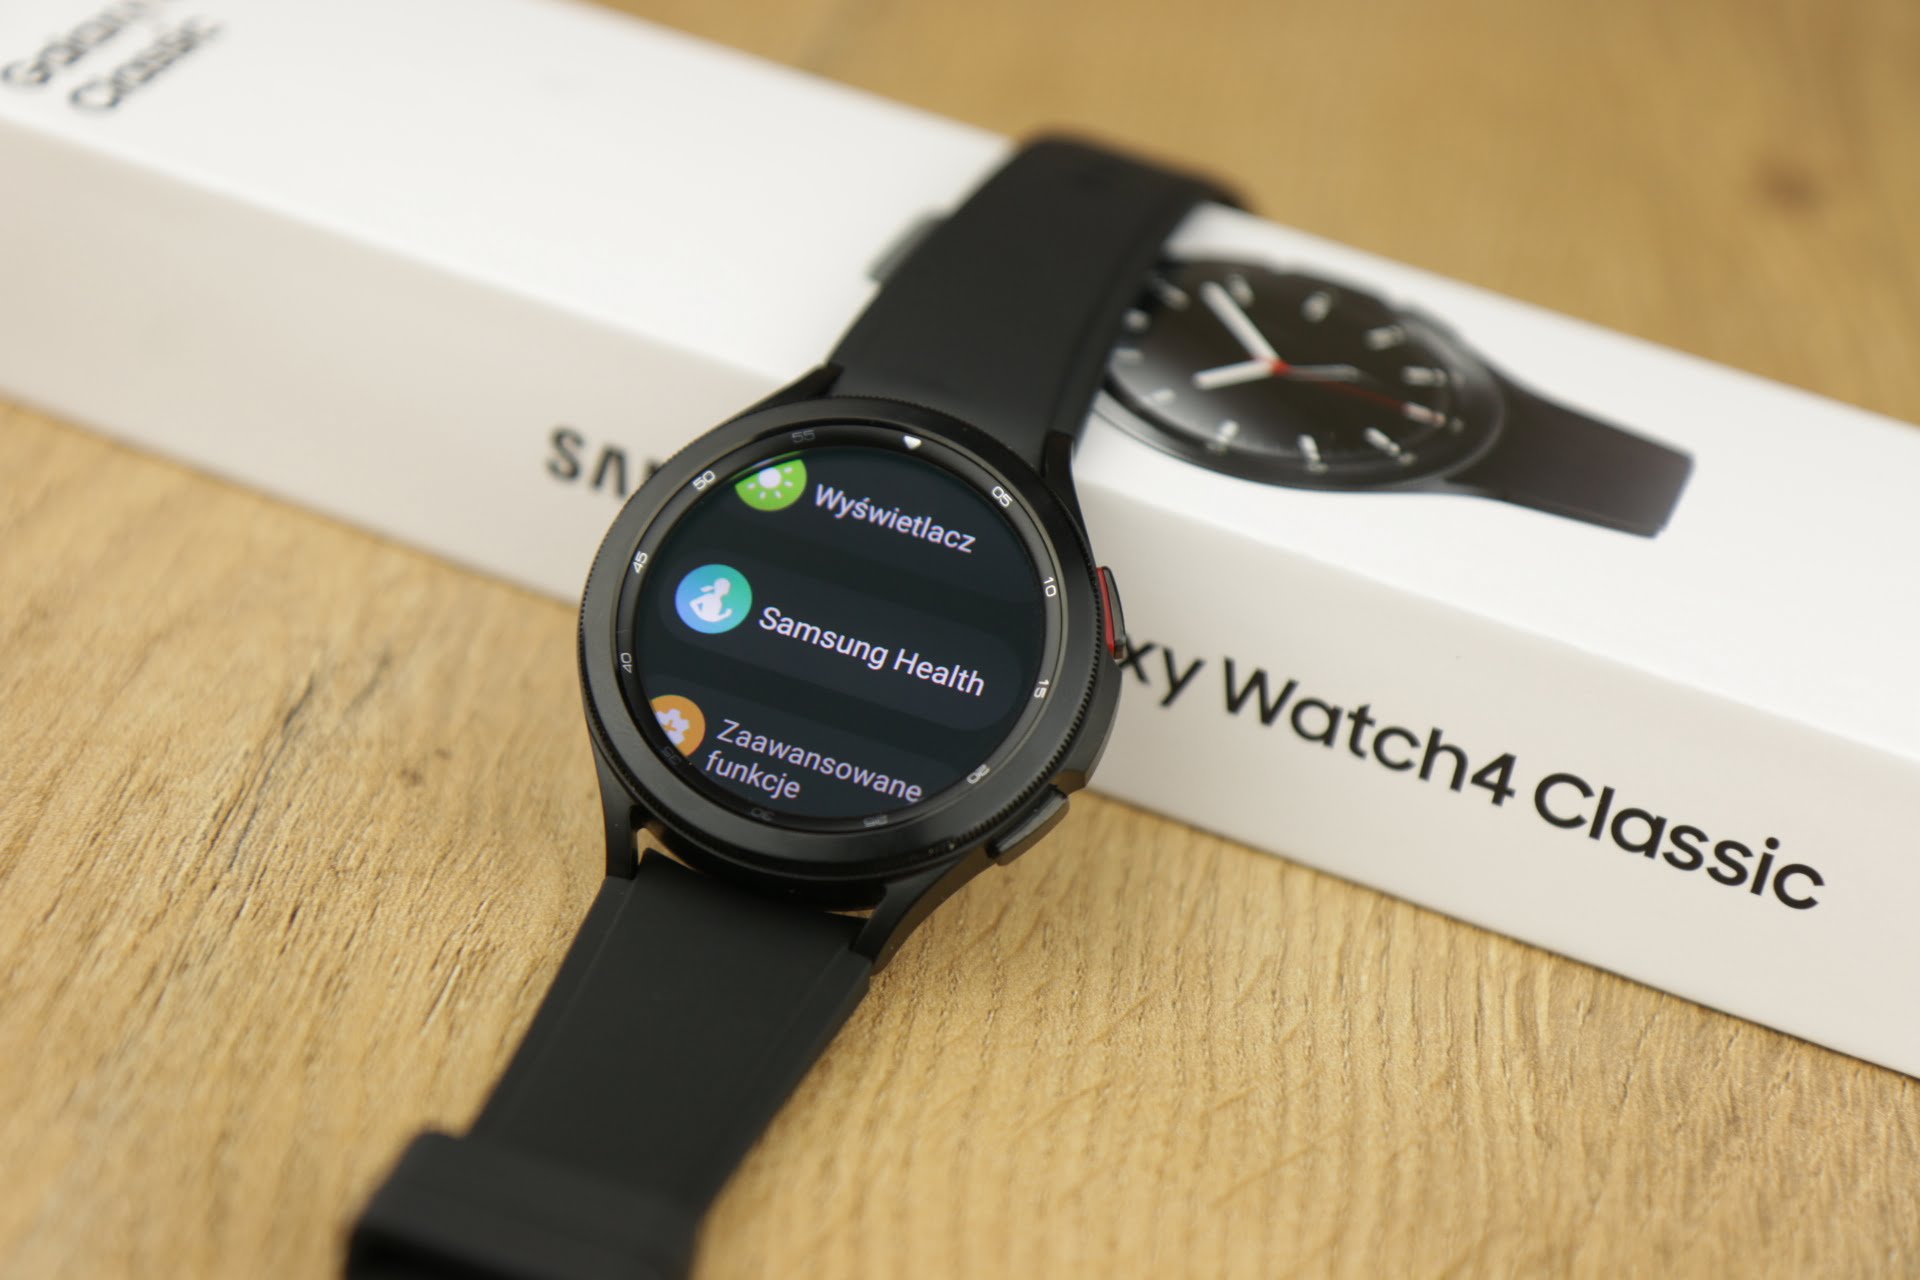 Samsung Galaxy Watch4 Classic recenzja test